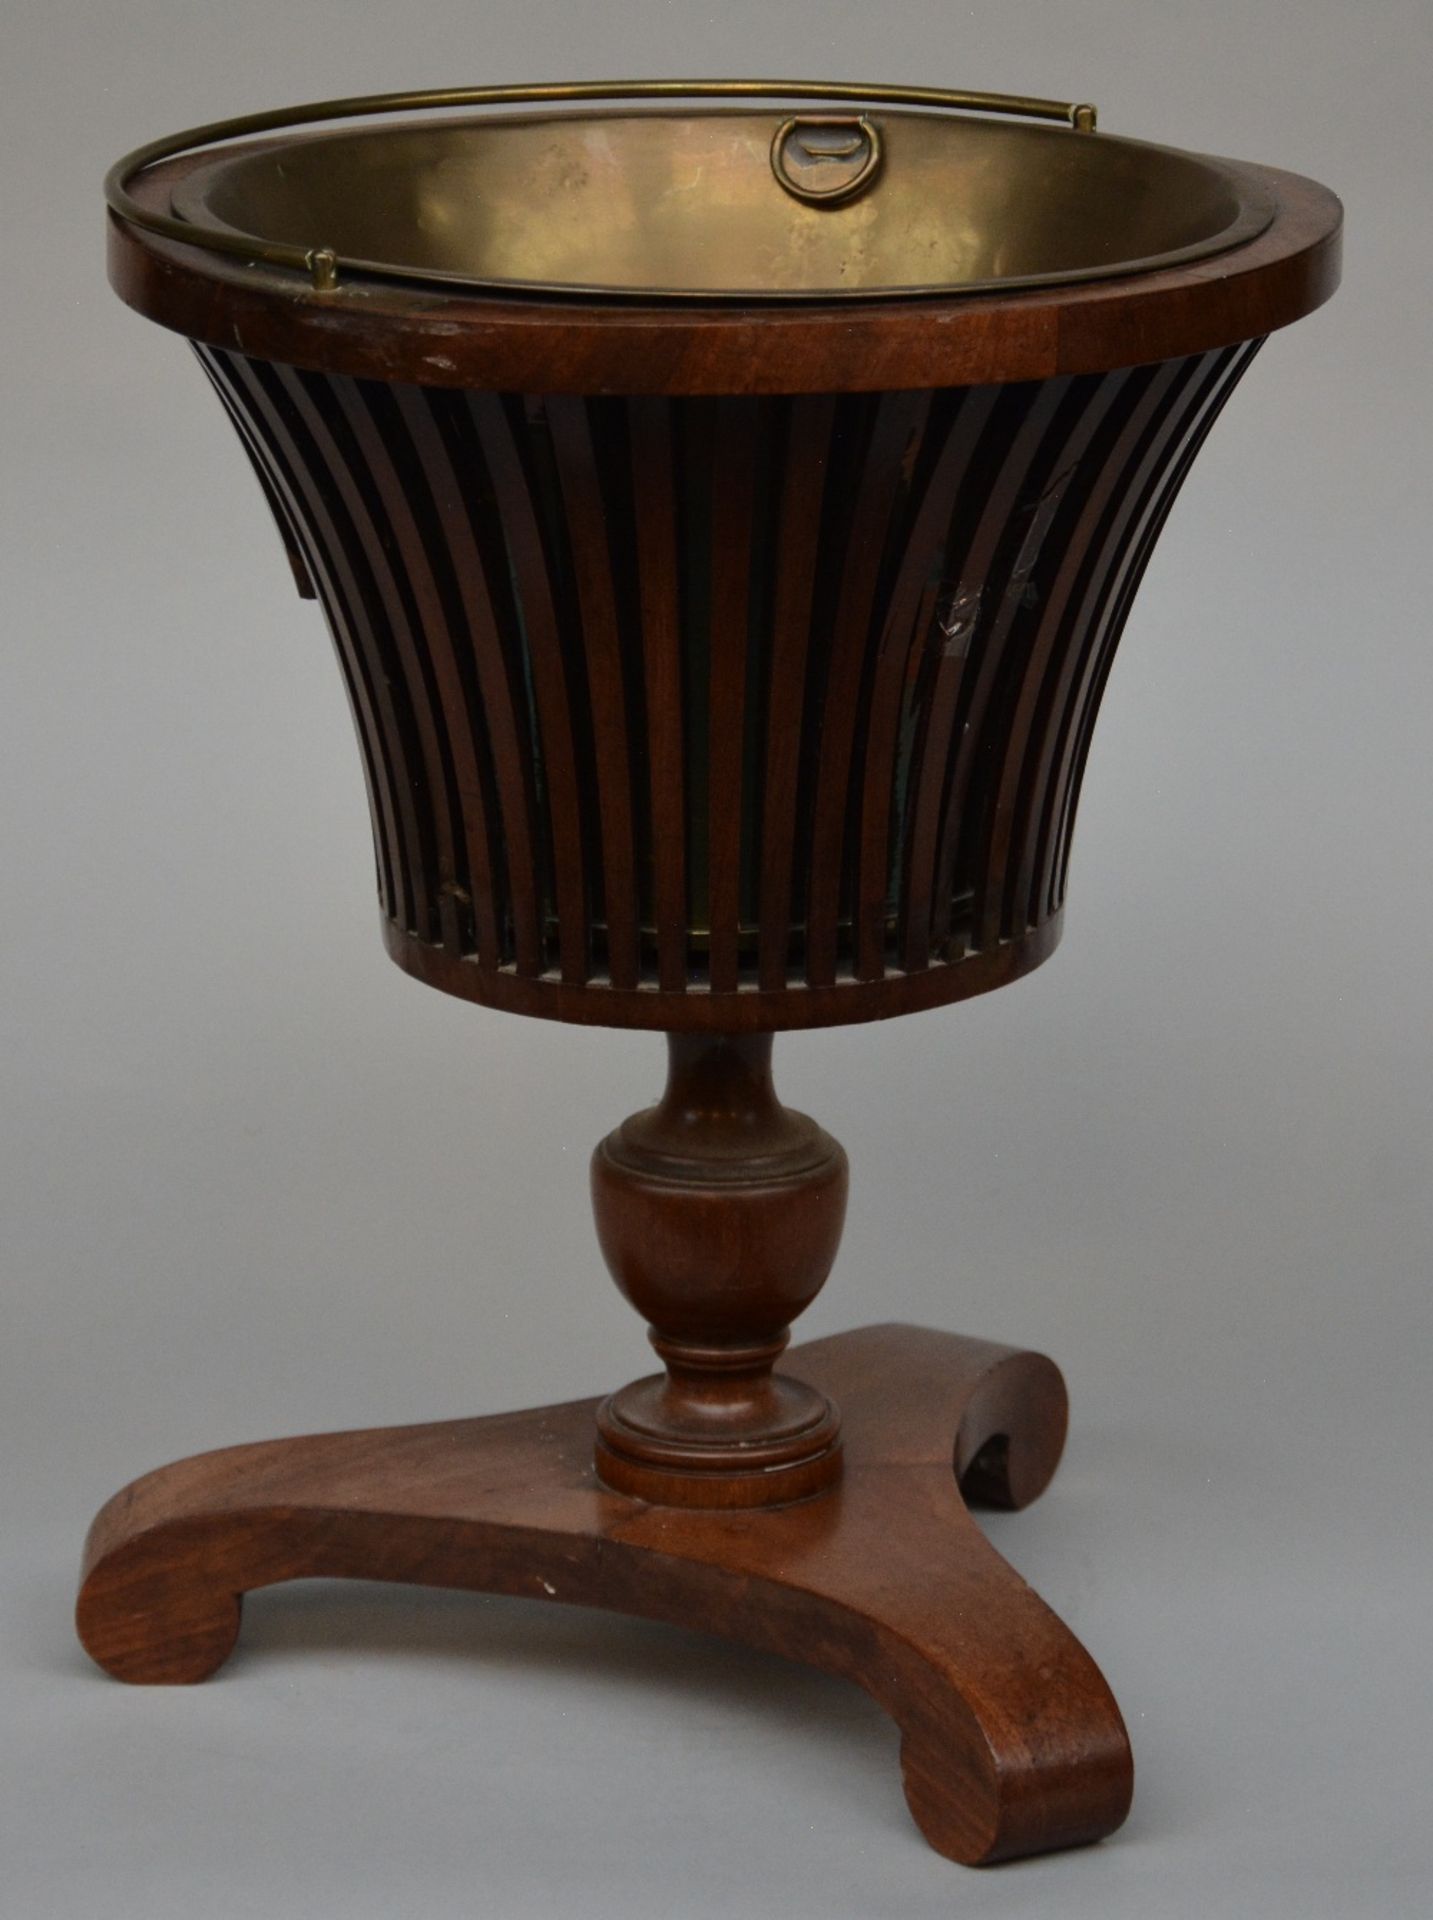 Mahogany and brass tea stove, 19thC, H 48 - Diameter 37,5 cm (minor damage) - Image 4 of 6